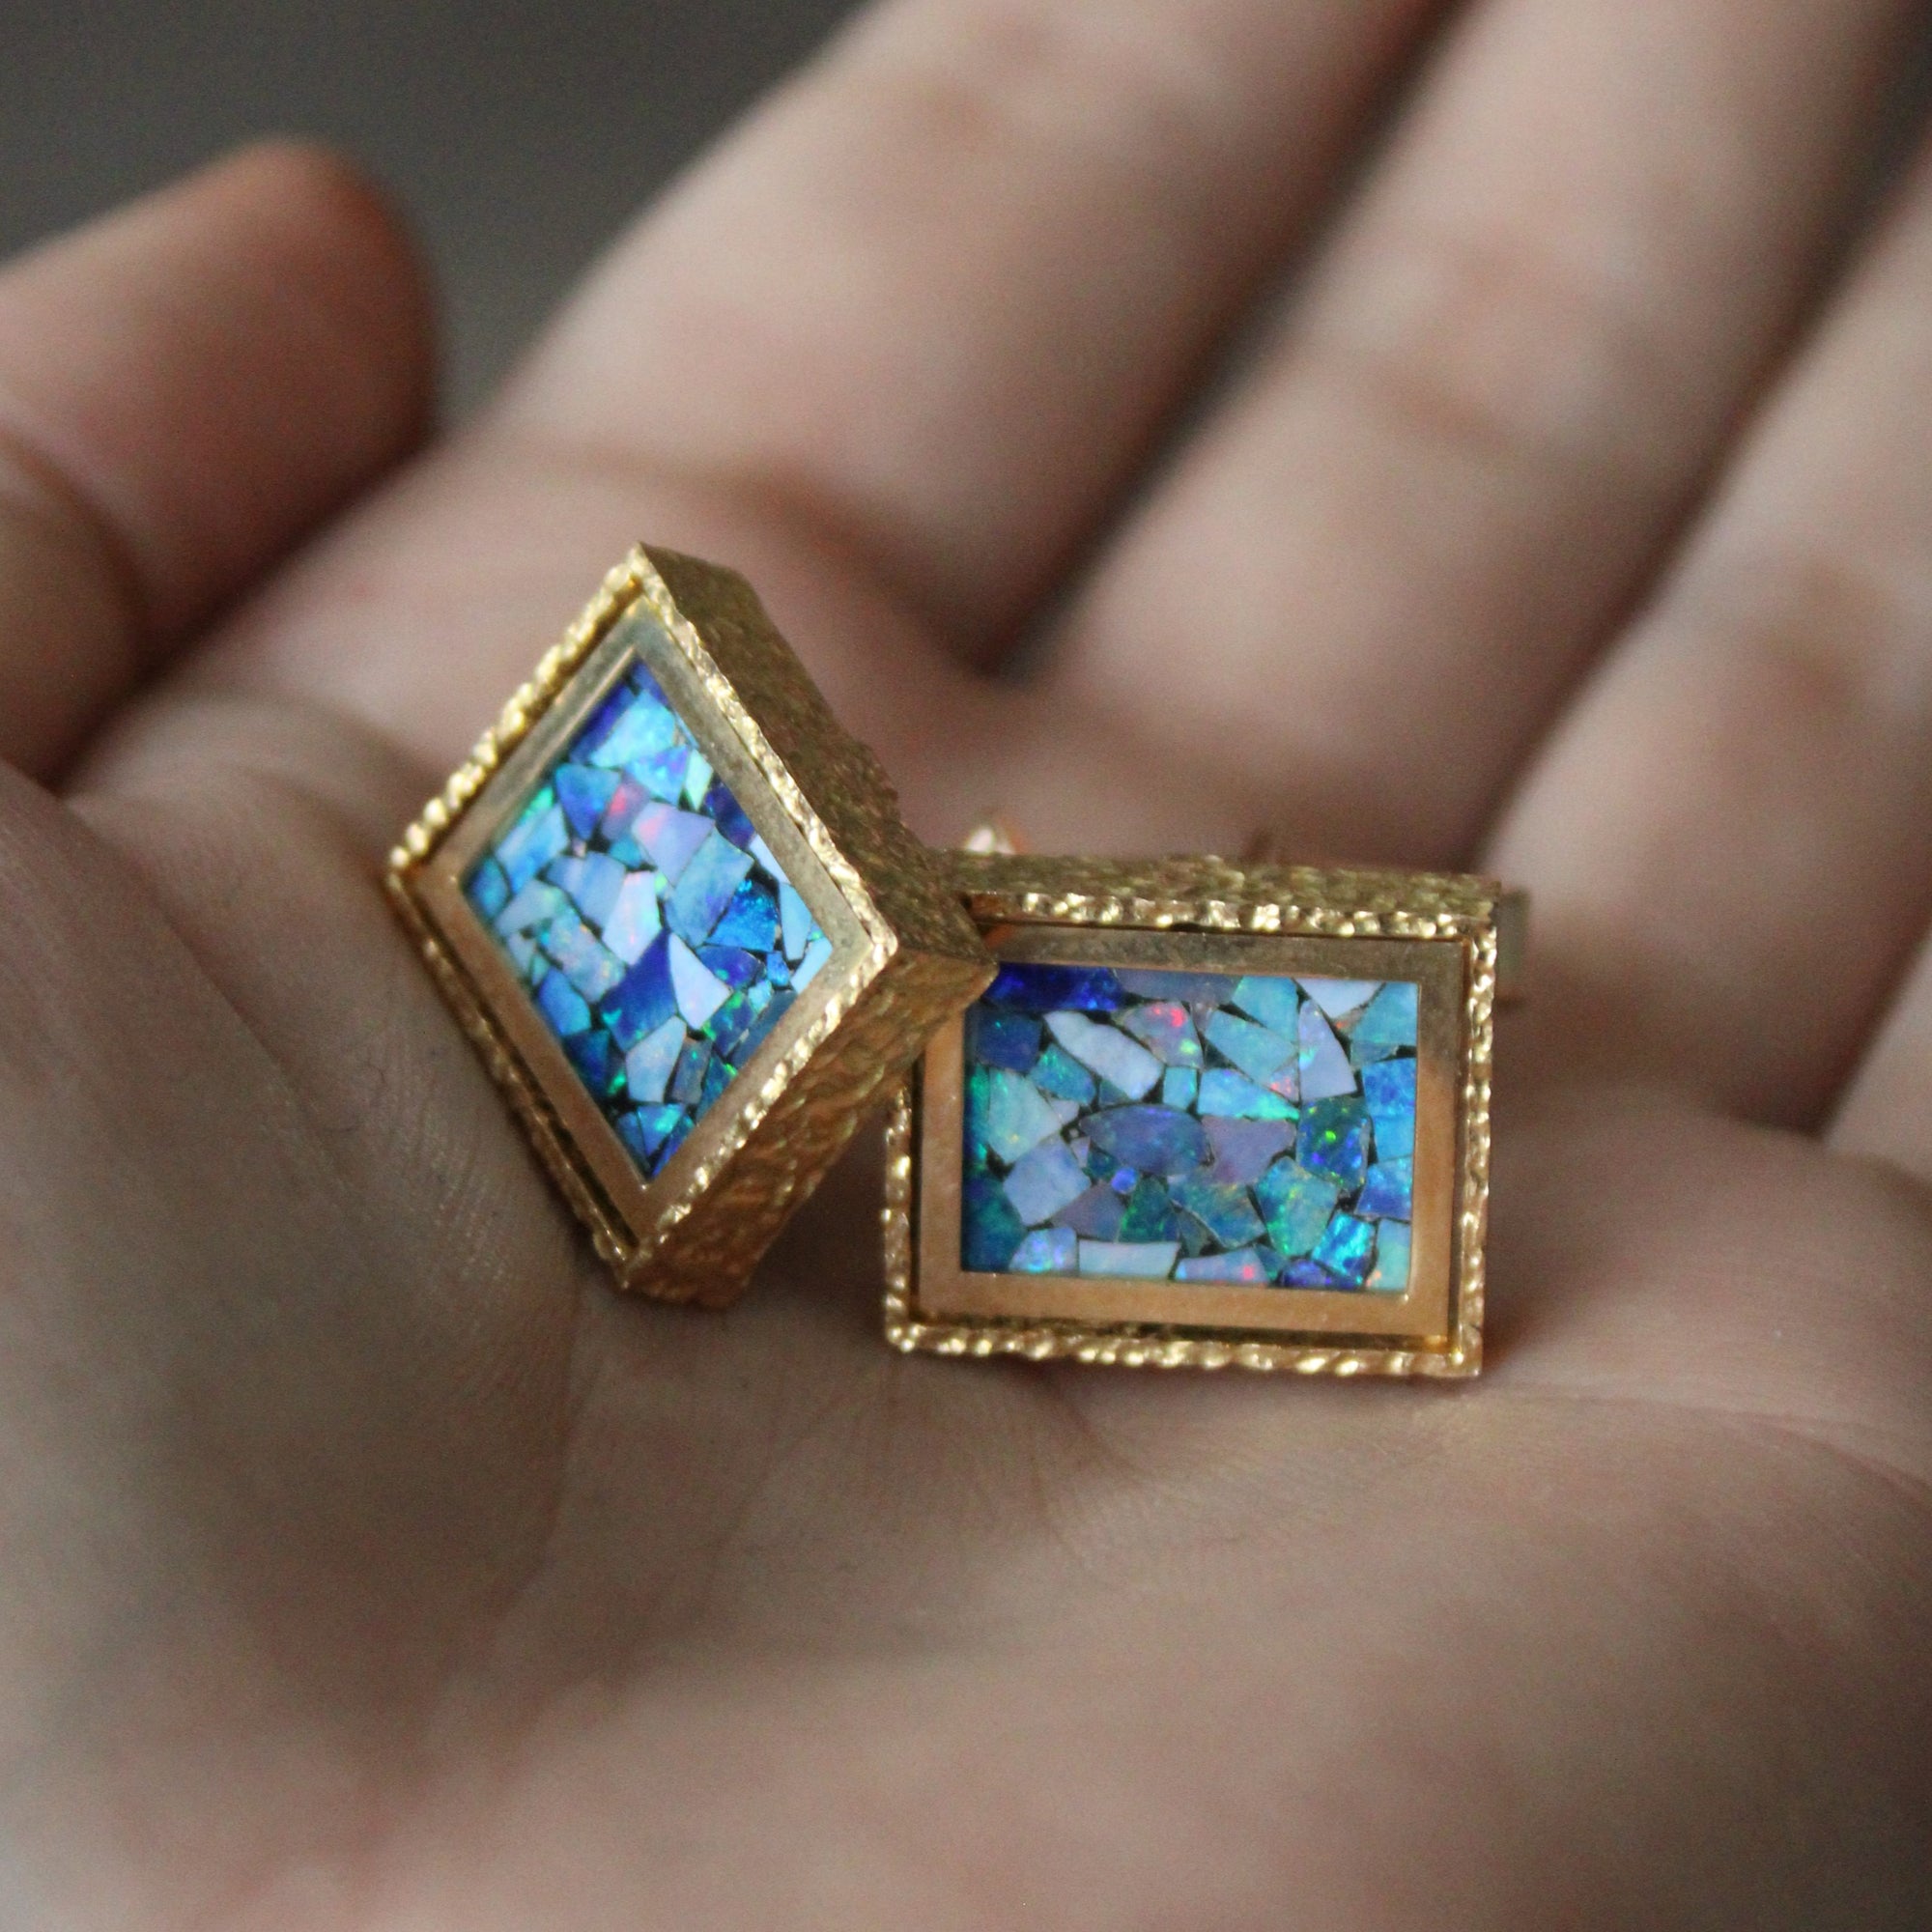 'Cavelti' Opal Mosaic Cufflinks | 4.50ctw |